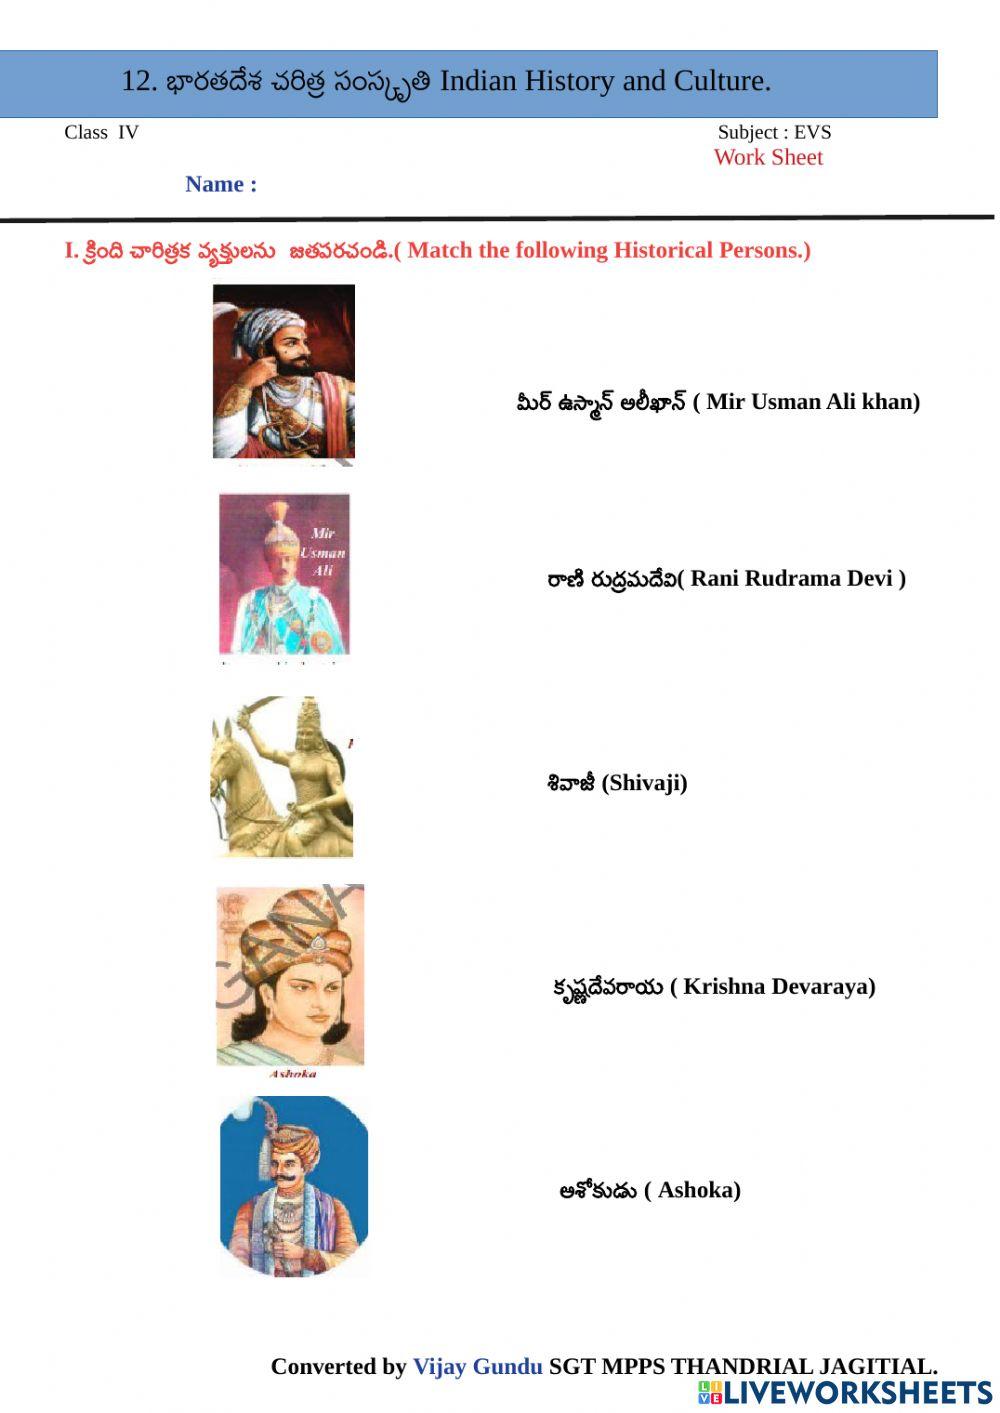 4th evs history 3  by Vijay Gundu